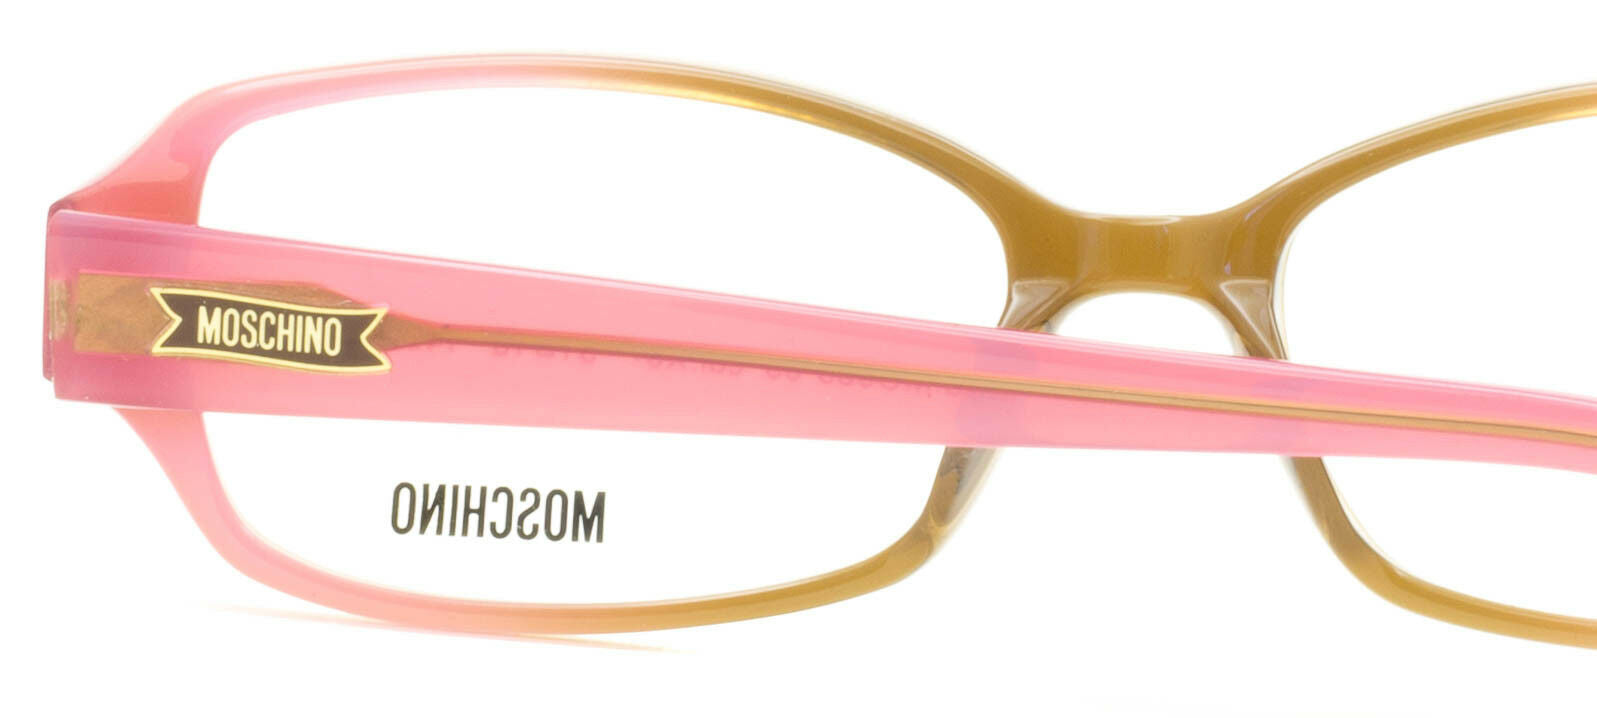 MOSCHINO LM 05 30400184 53mm Eyewear FRAMES RX Optical Glasses Eyeglasses -  New - GGV Eyewear